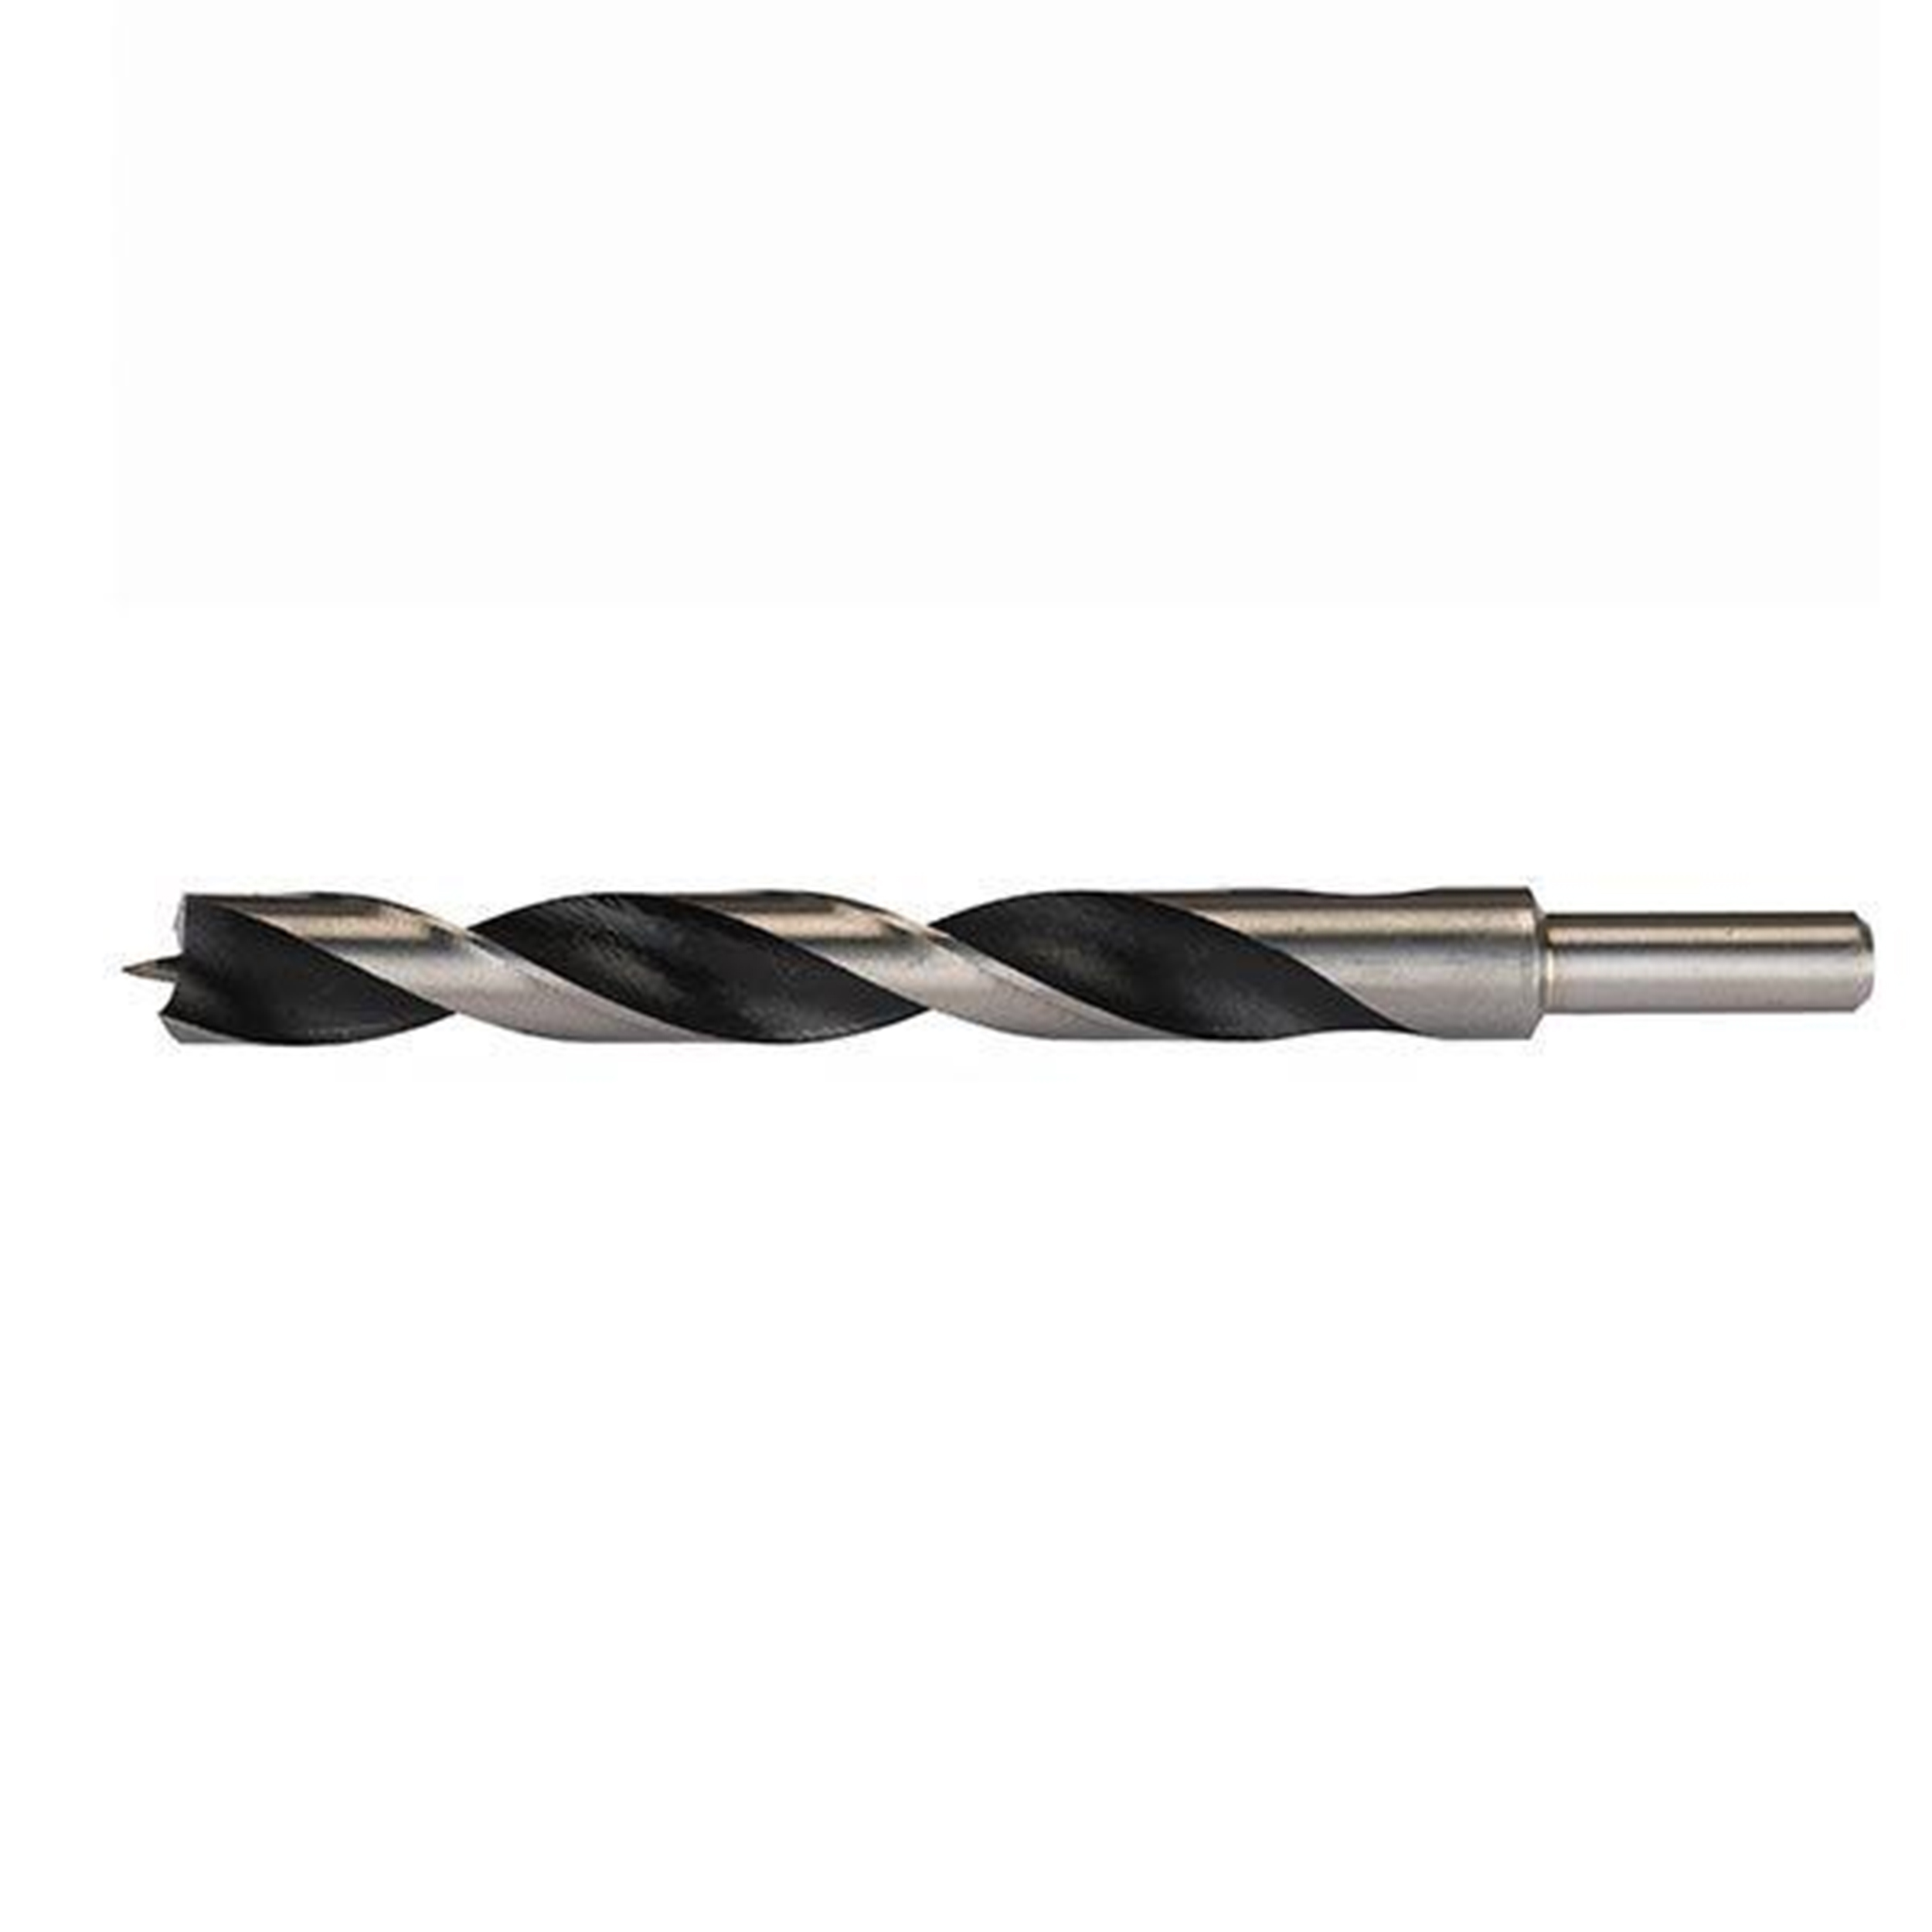 9/16-inch Chrome-vanadium Steel Brad Point Drill Bit